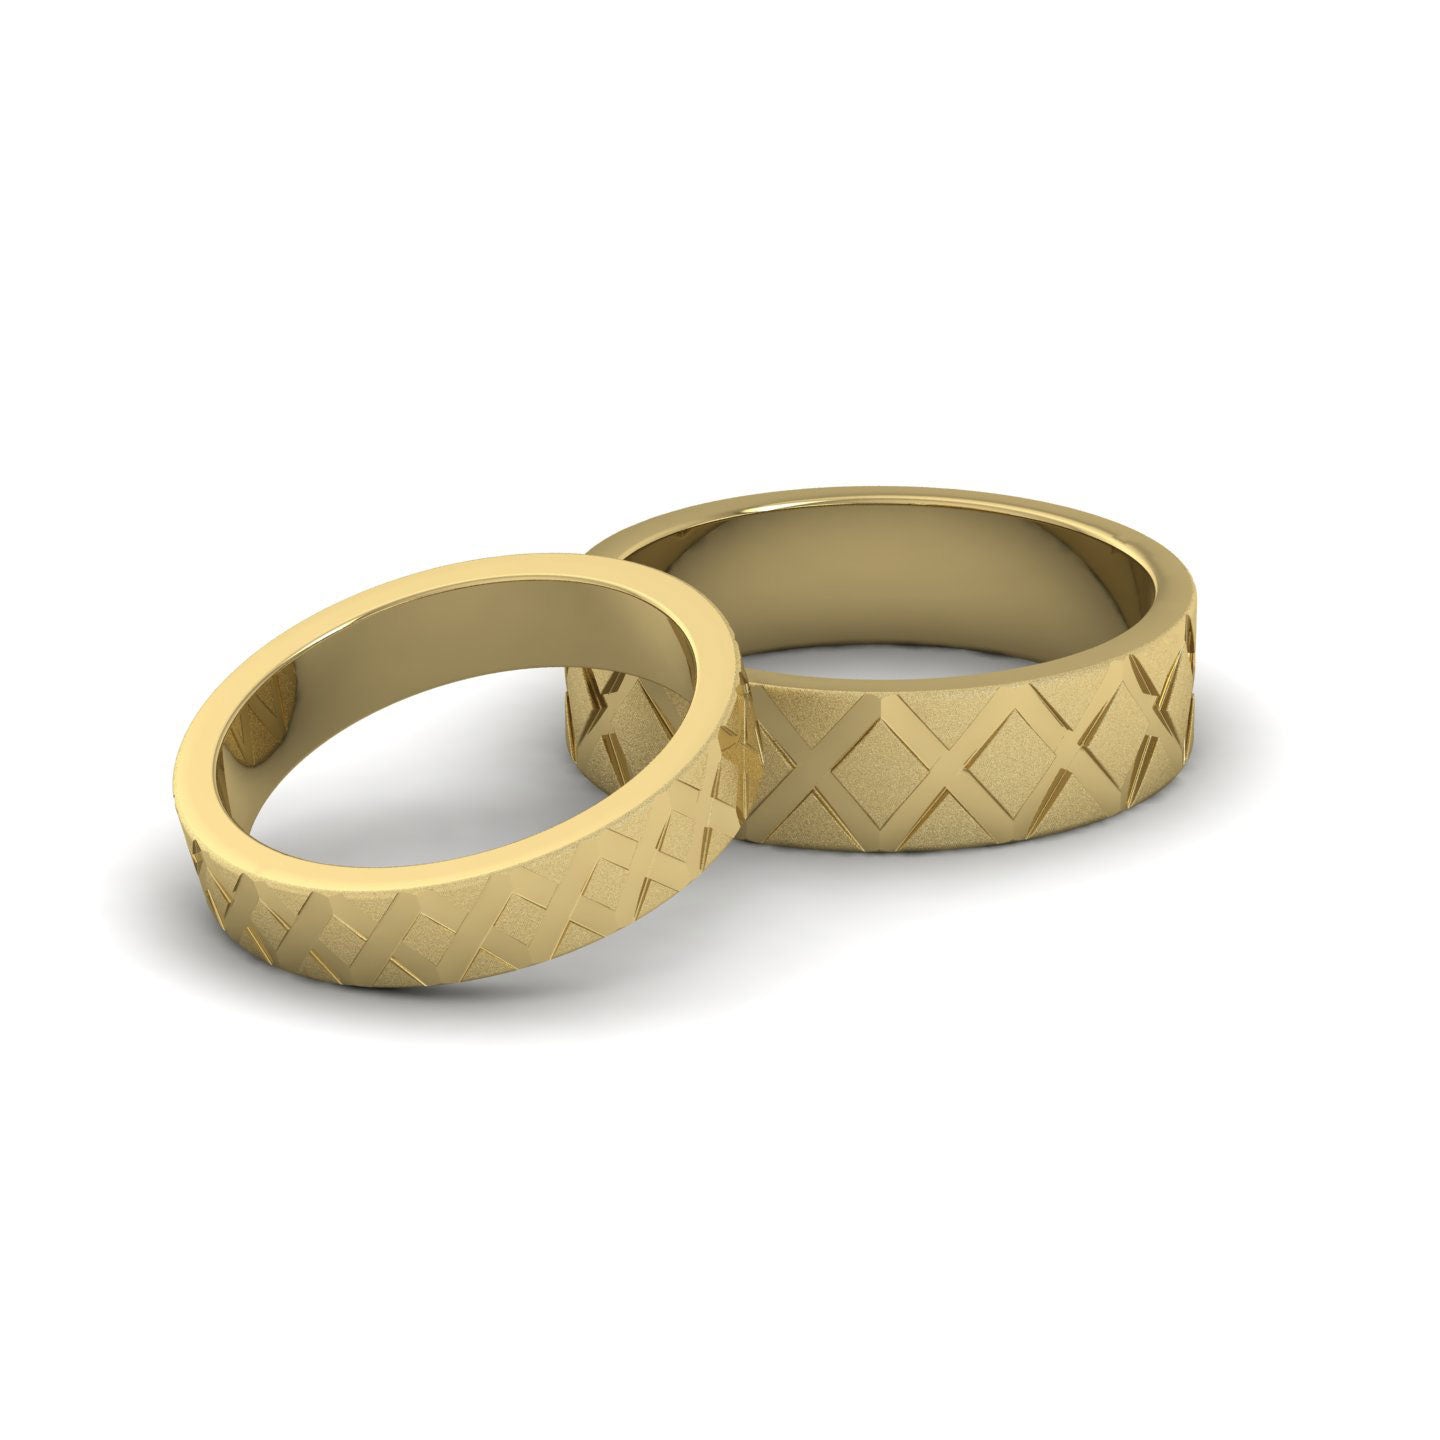 Diagonal Cross Pattern 22ct Yellow Gold 6mm Wedding Ring